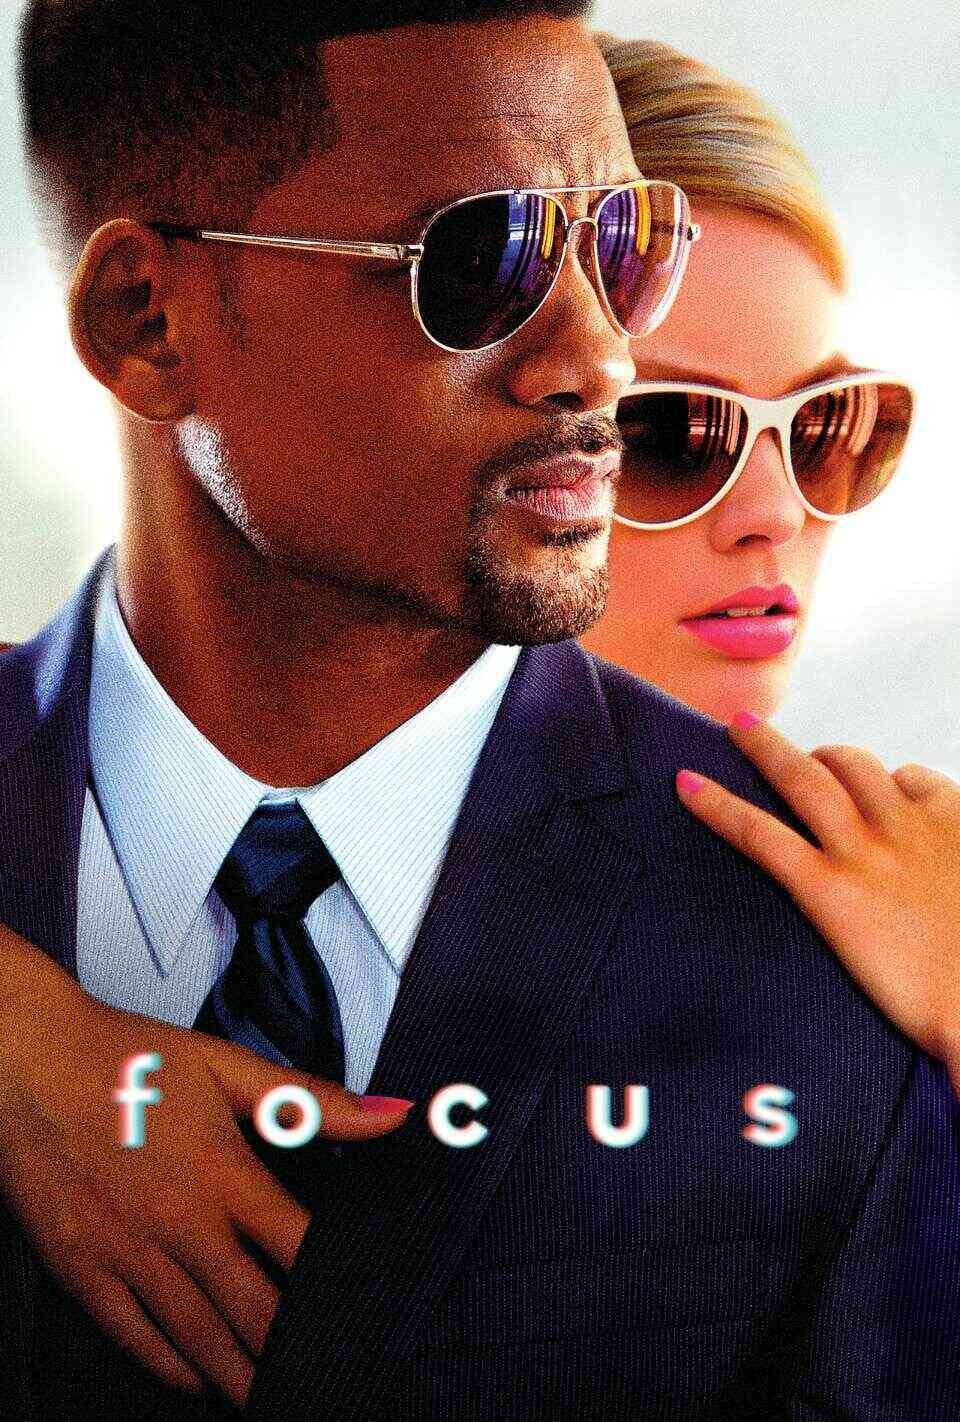 Read Focus screenplay (poster)